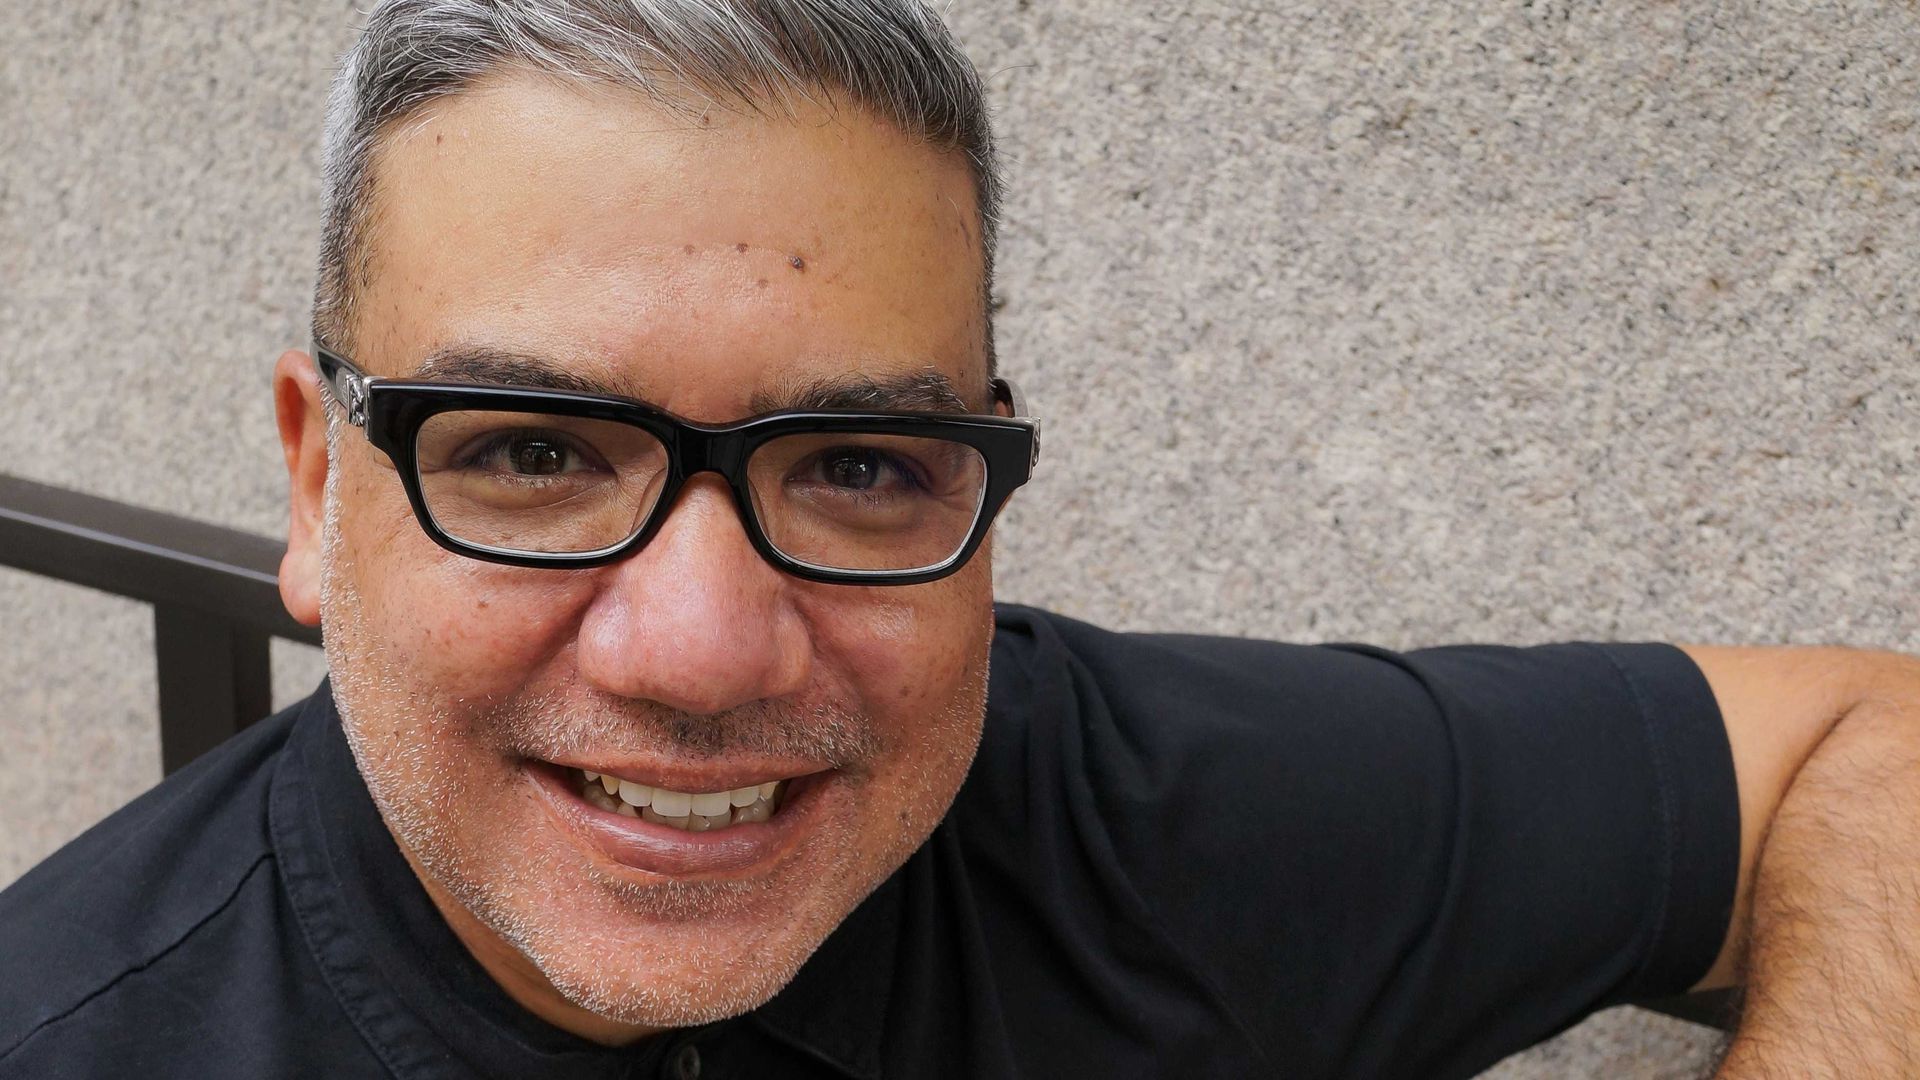 Eugene Hernandez, who was just named the next Sundance Film Festival director, smiles